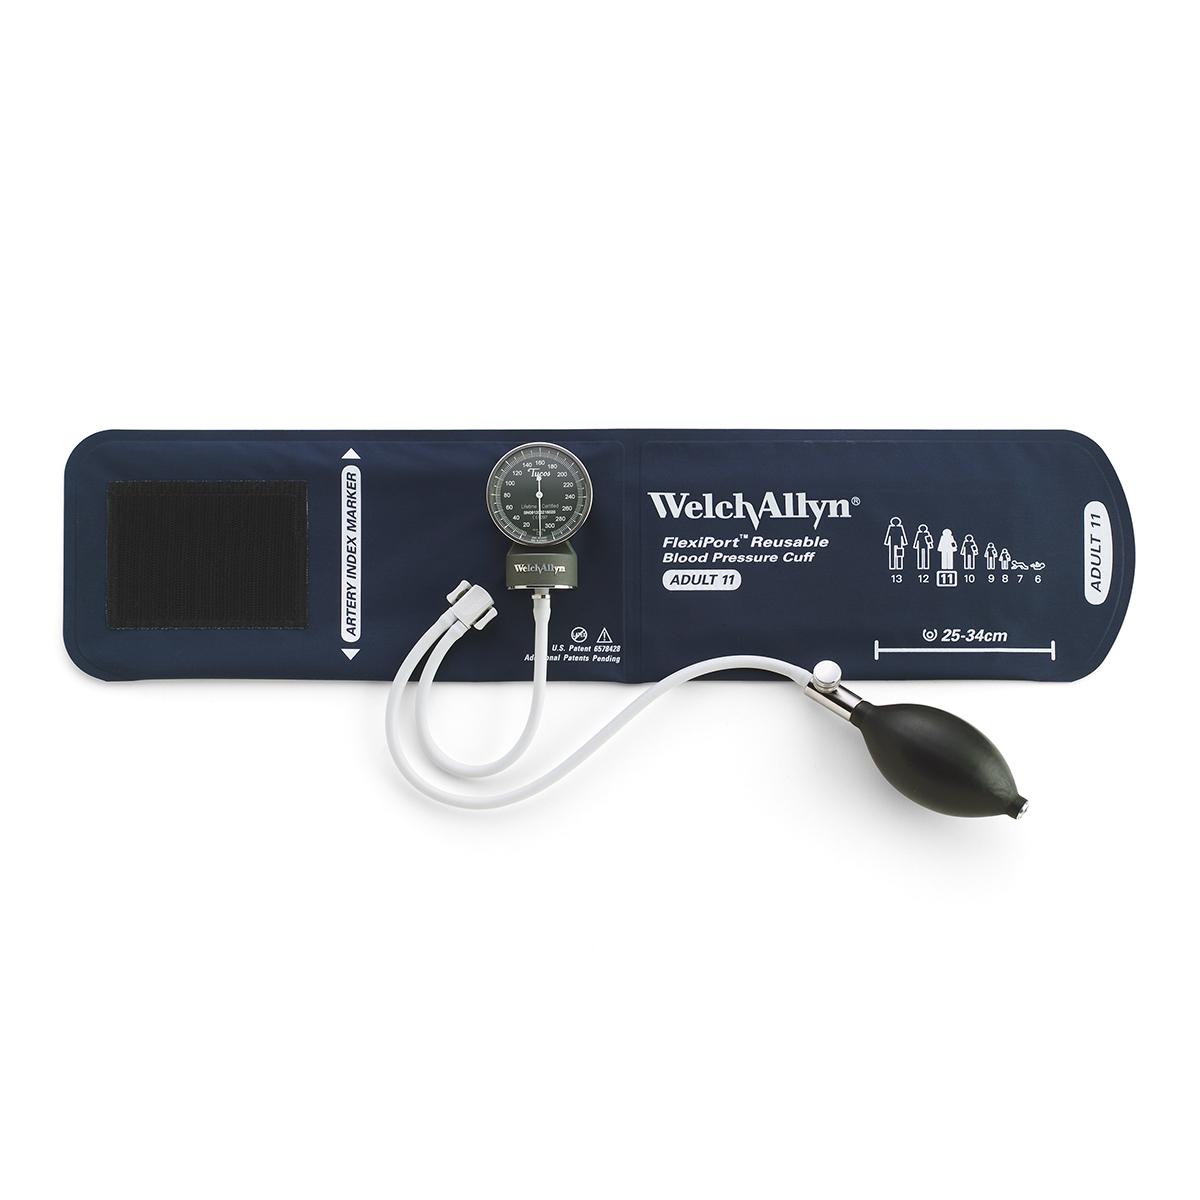 Welch Allyn 플래티넘 시리즈 DS48A 포켓 혈압계가 검은색 Welch Allyn Adult 11 크기의 압력 커프에 끼워짐